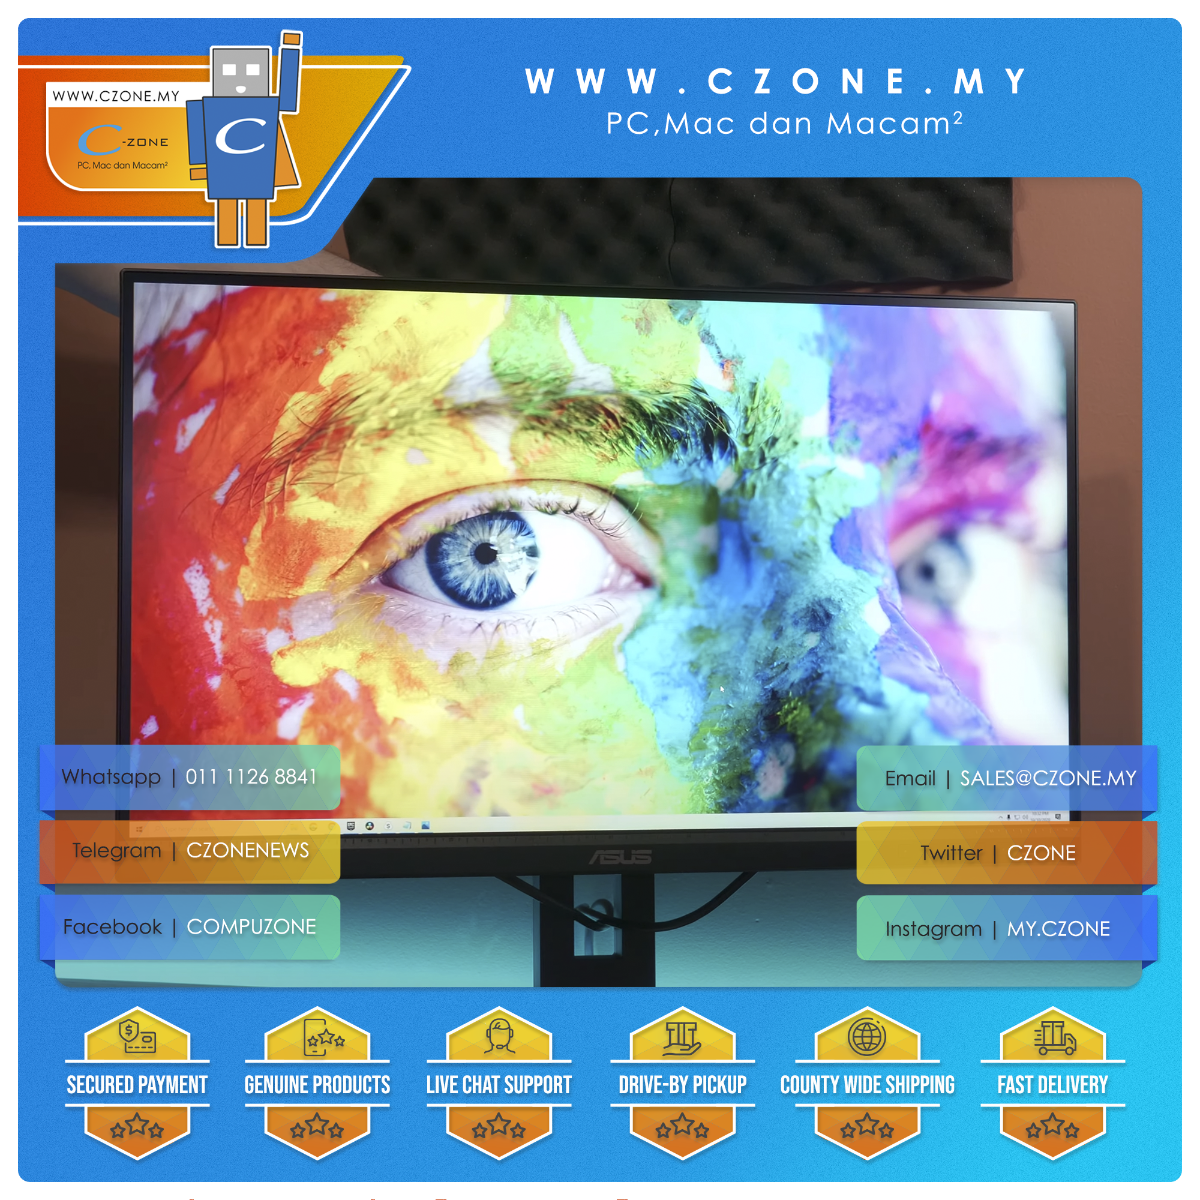 https://czone.my/czone/computer-components/monitors/professional-monitors.html